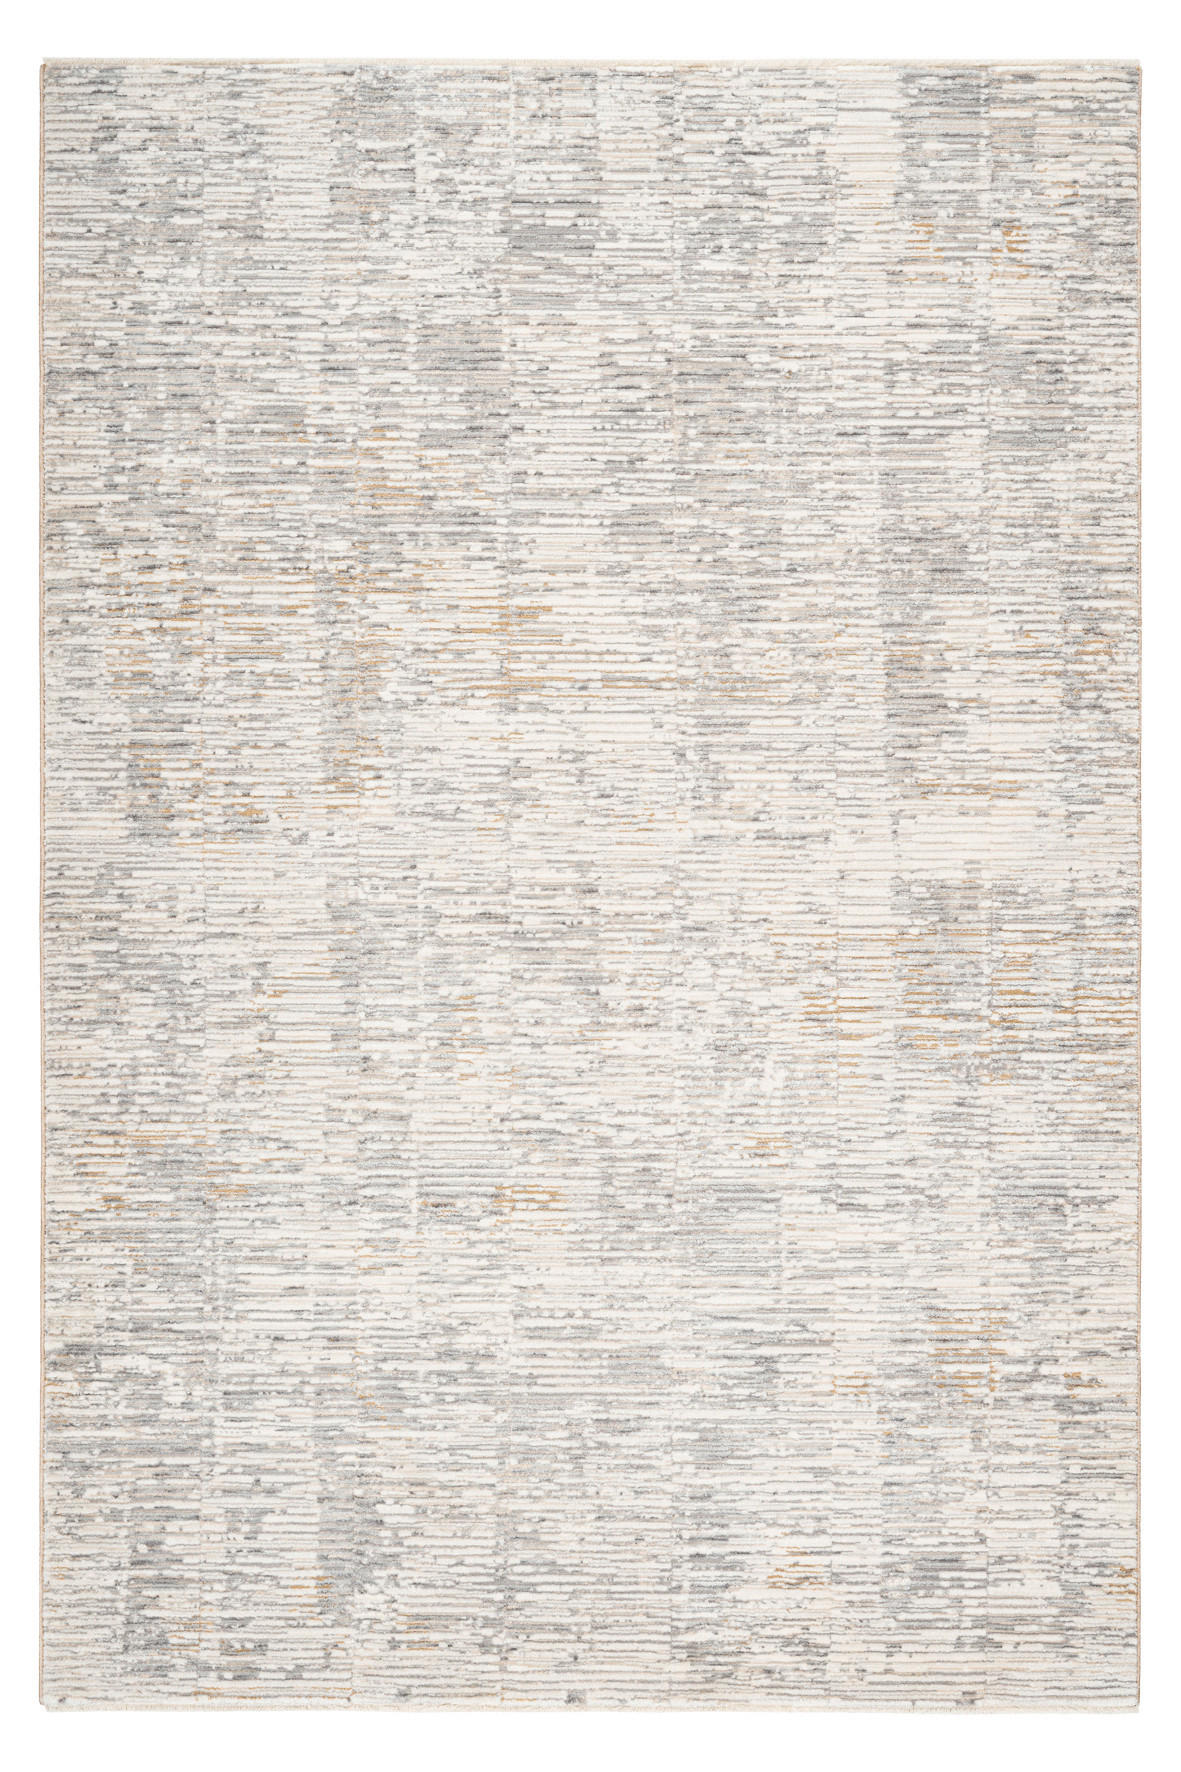 WEBTEPPICH  140/200 cm  Taupe   - Taupe, KONVENTIONELL, Textil (140/200cm) - Novel